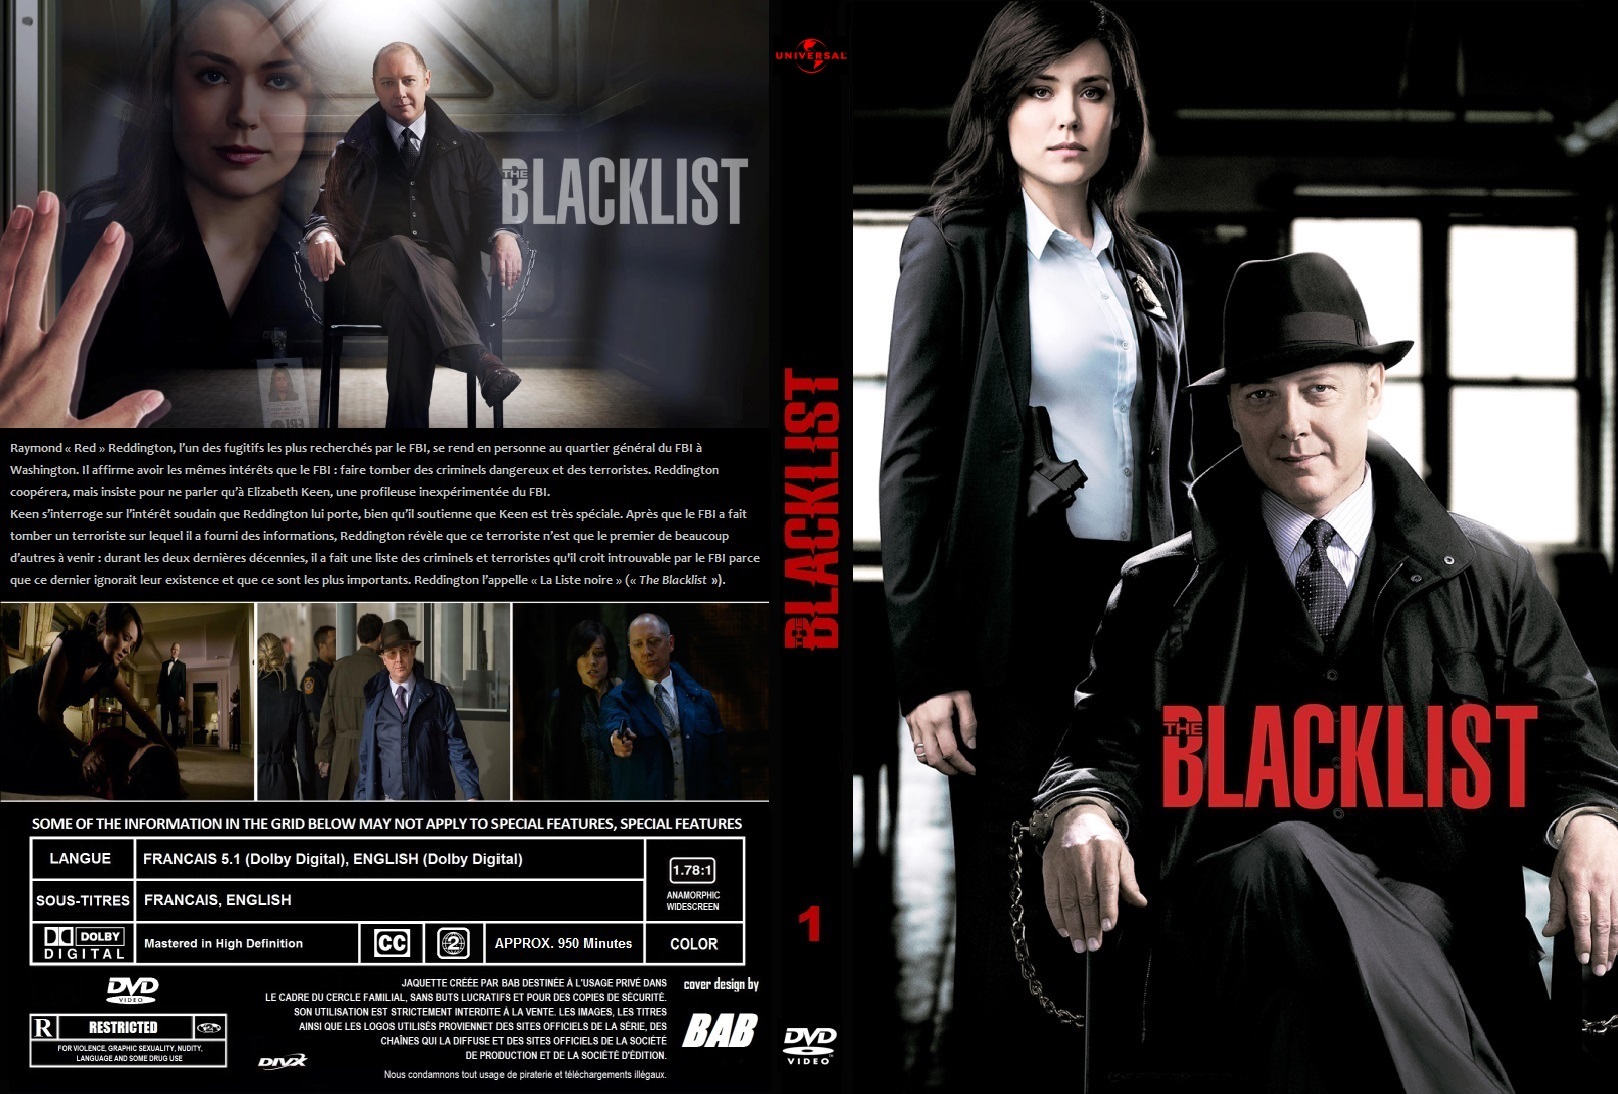 Jaquette DVD The Blacklist Saison 1 custom